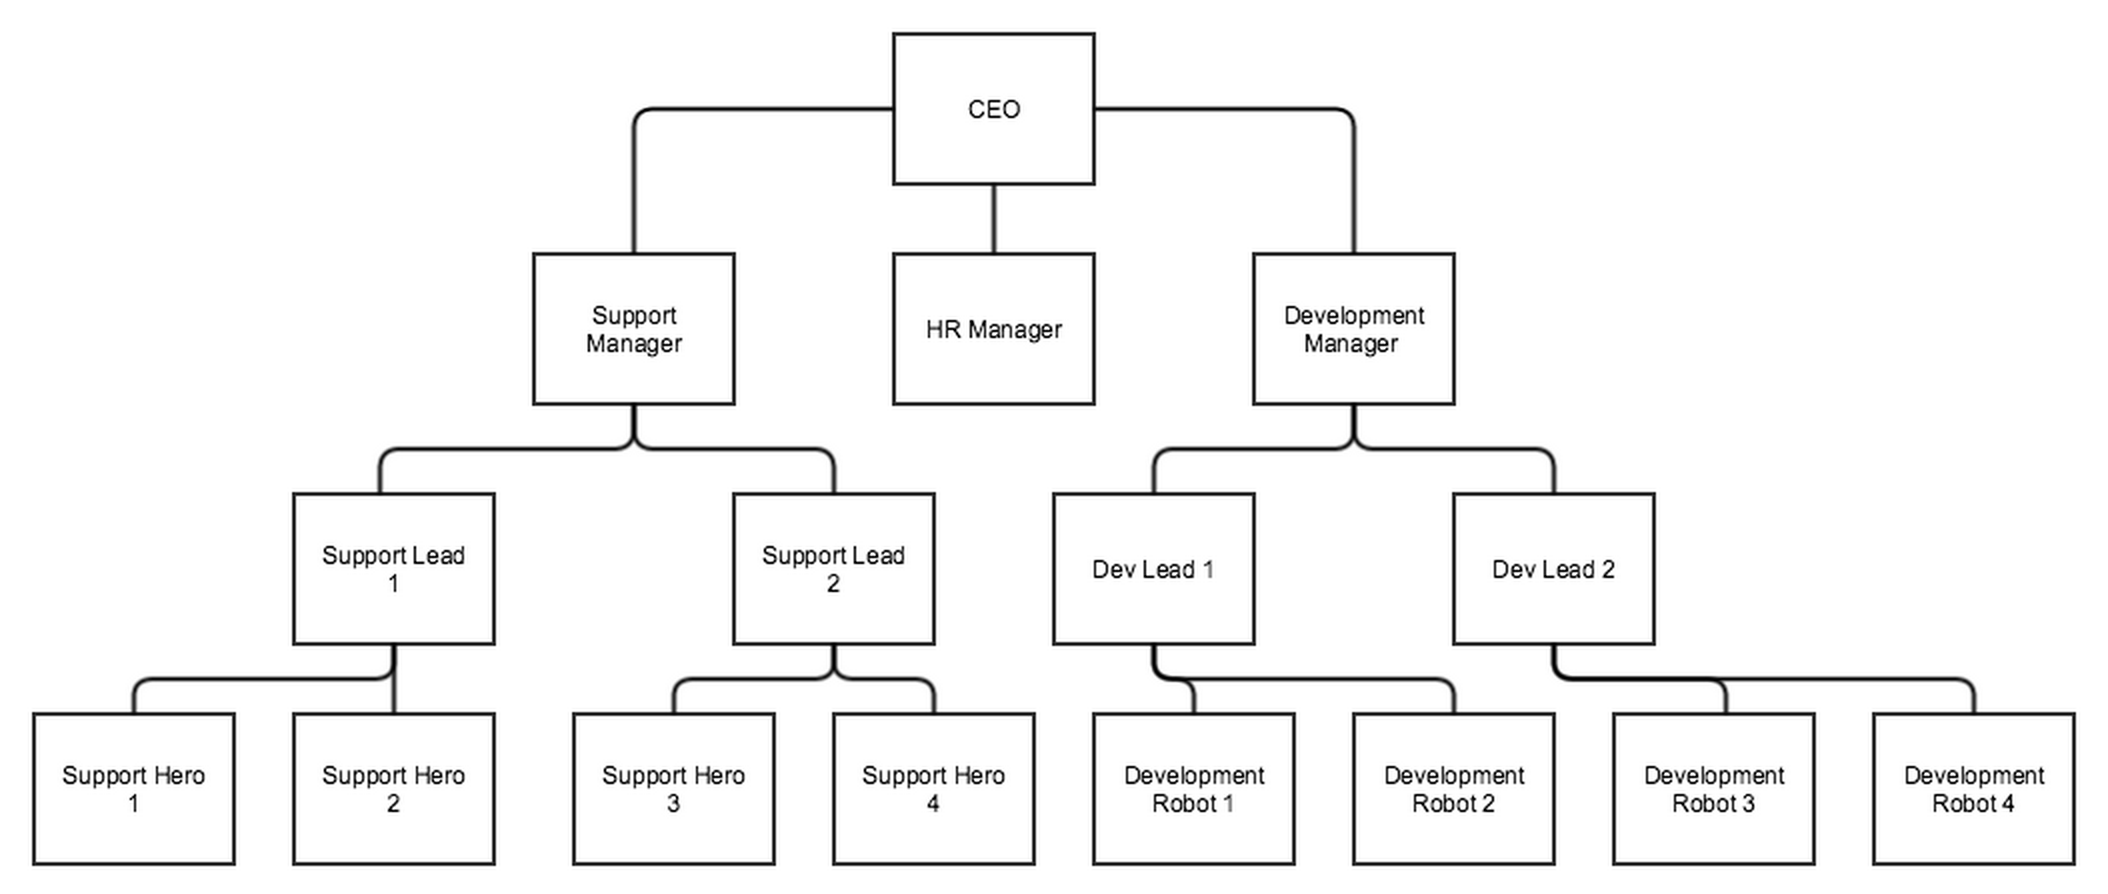 Example Organizational Chart